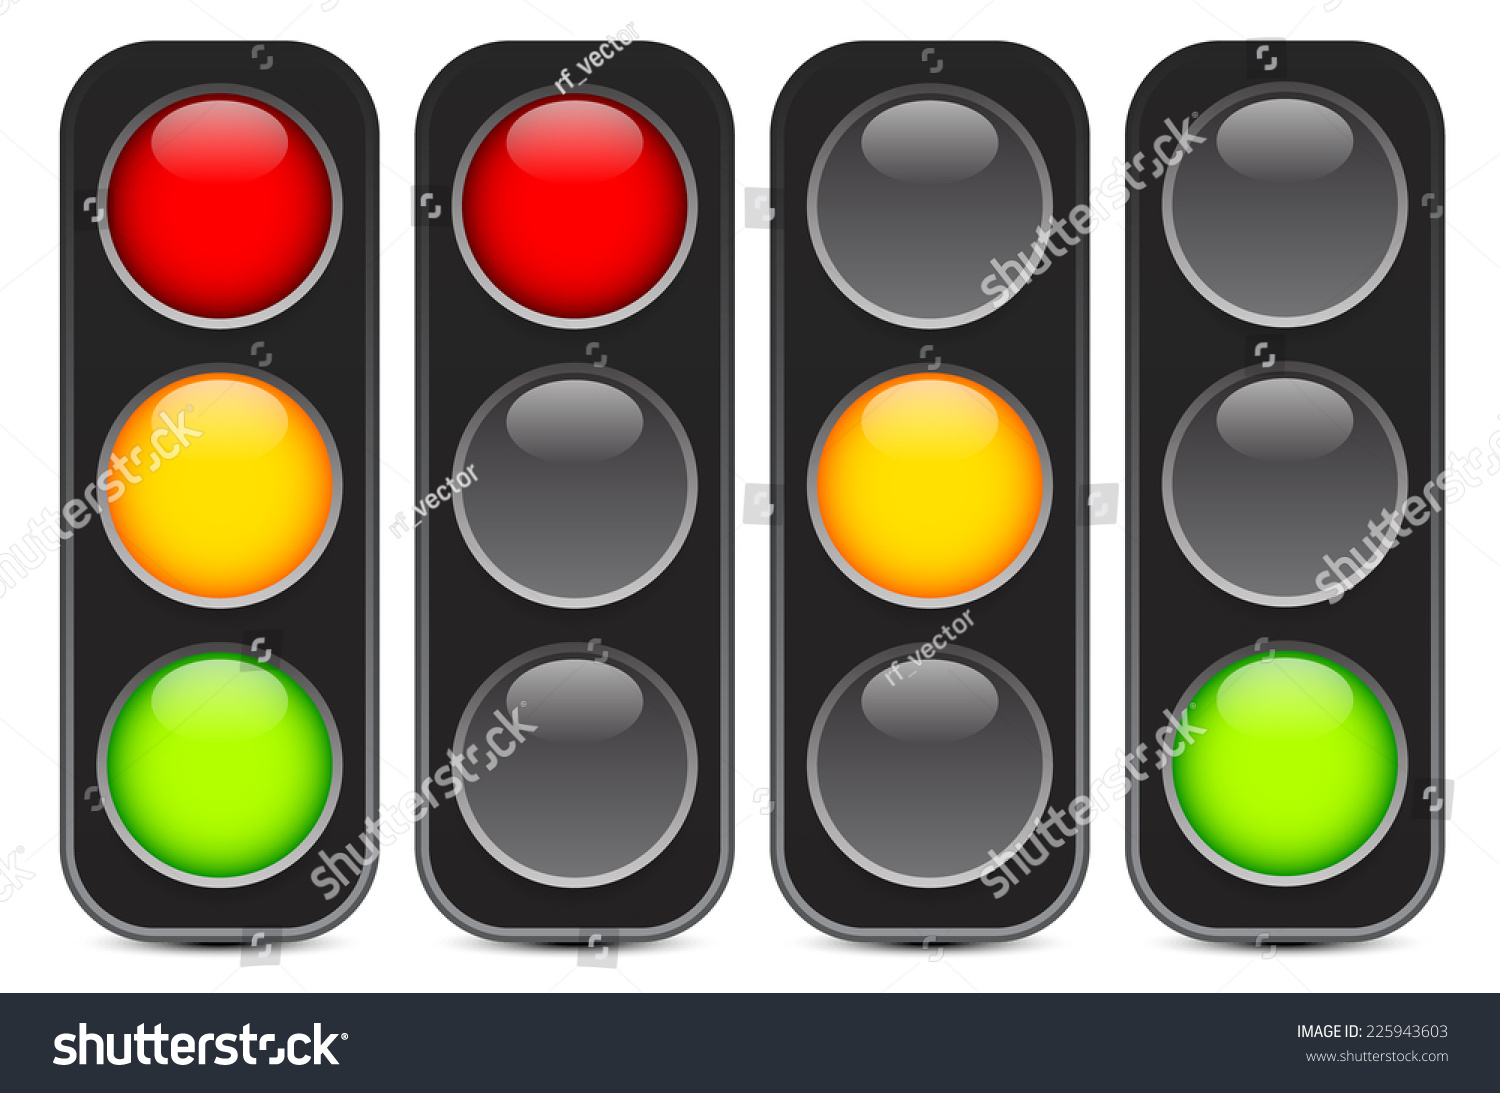 Traffic Light Traffic Light Sequence Vector Stock Vector Royalty Free